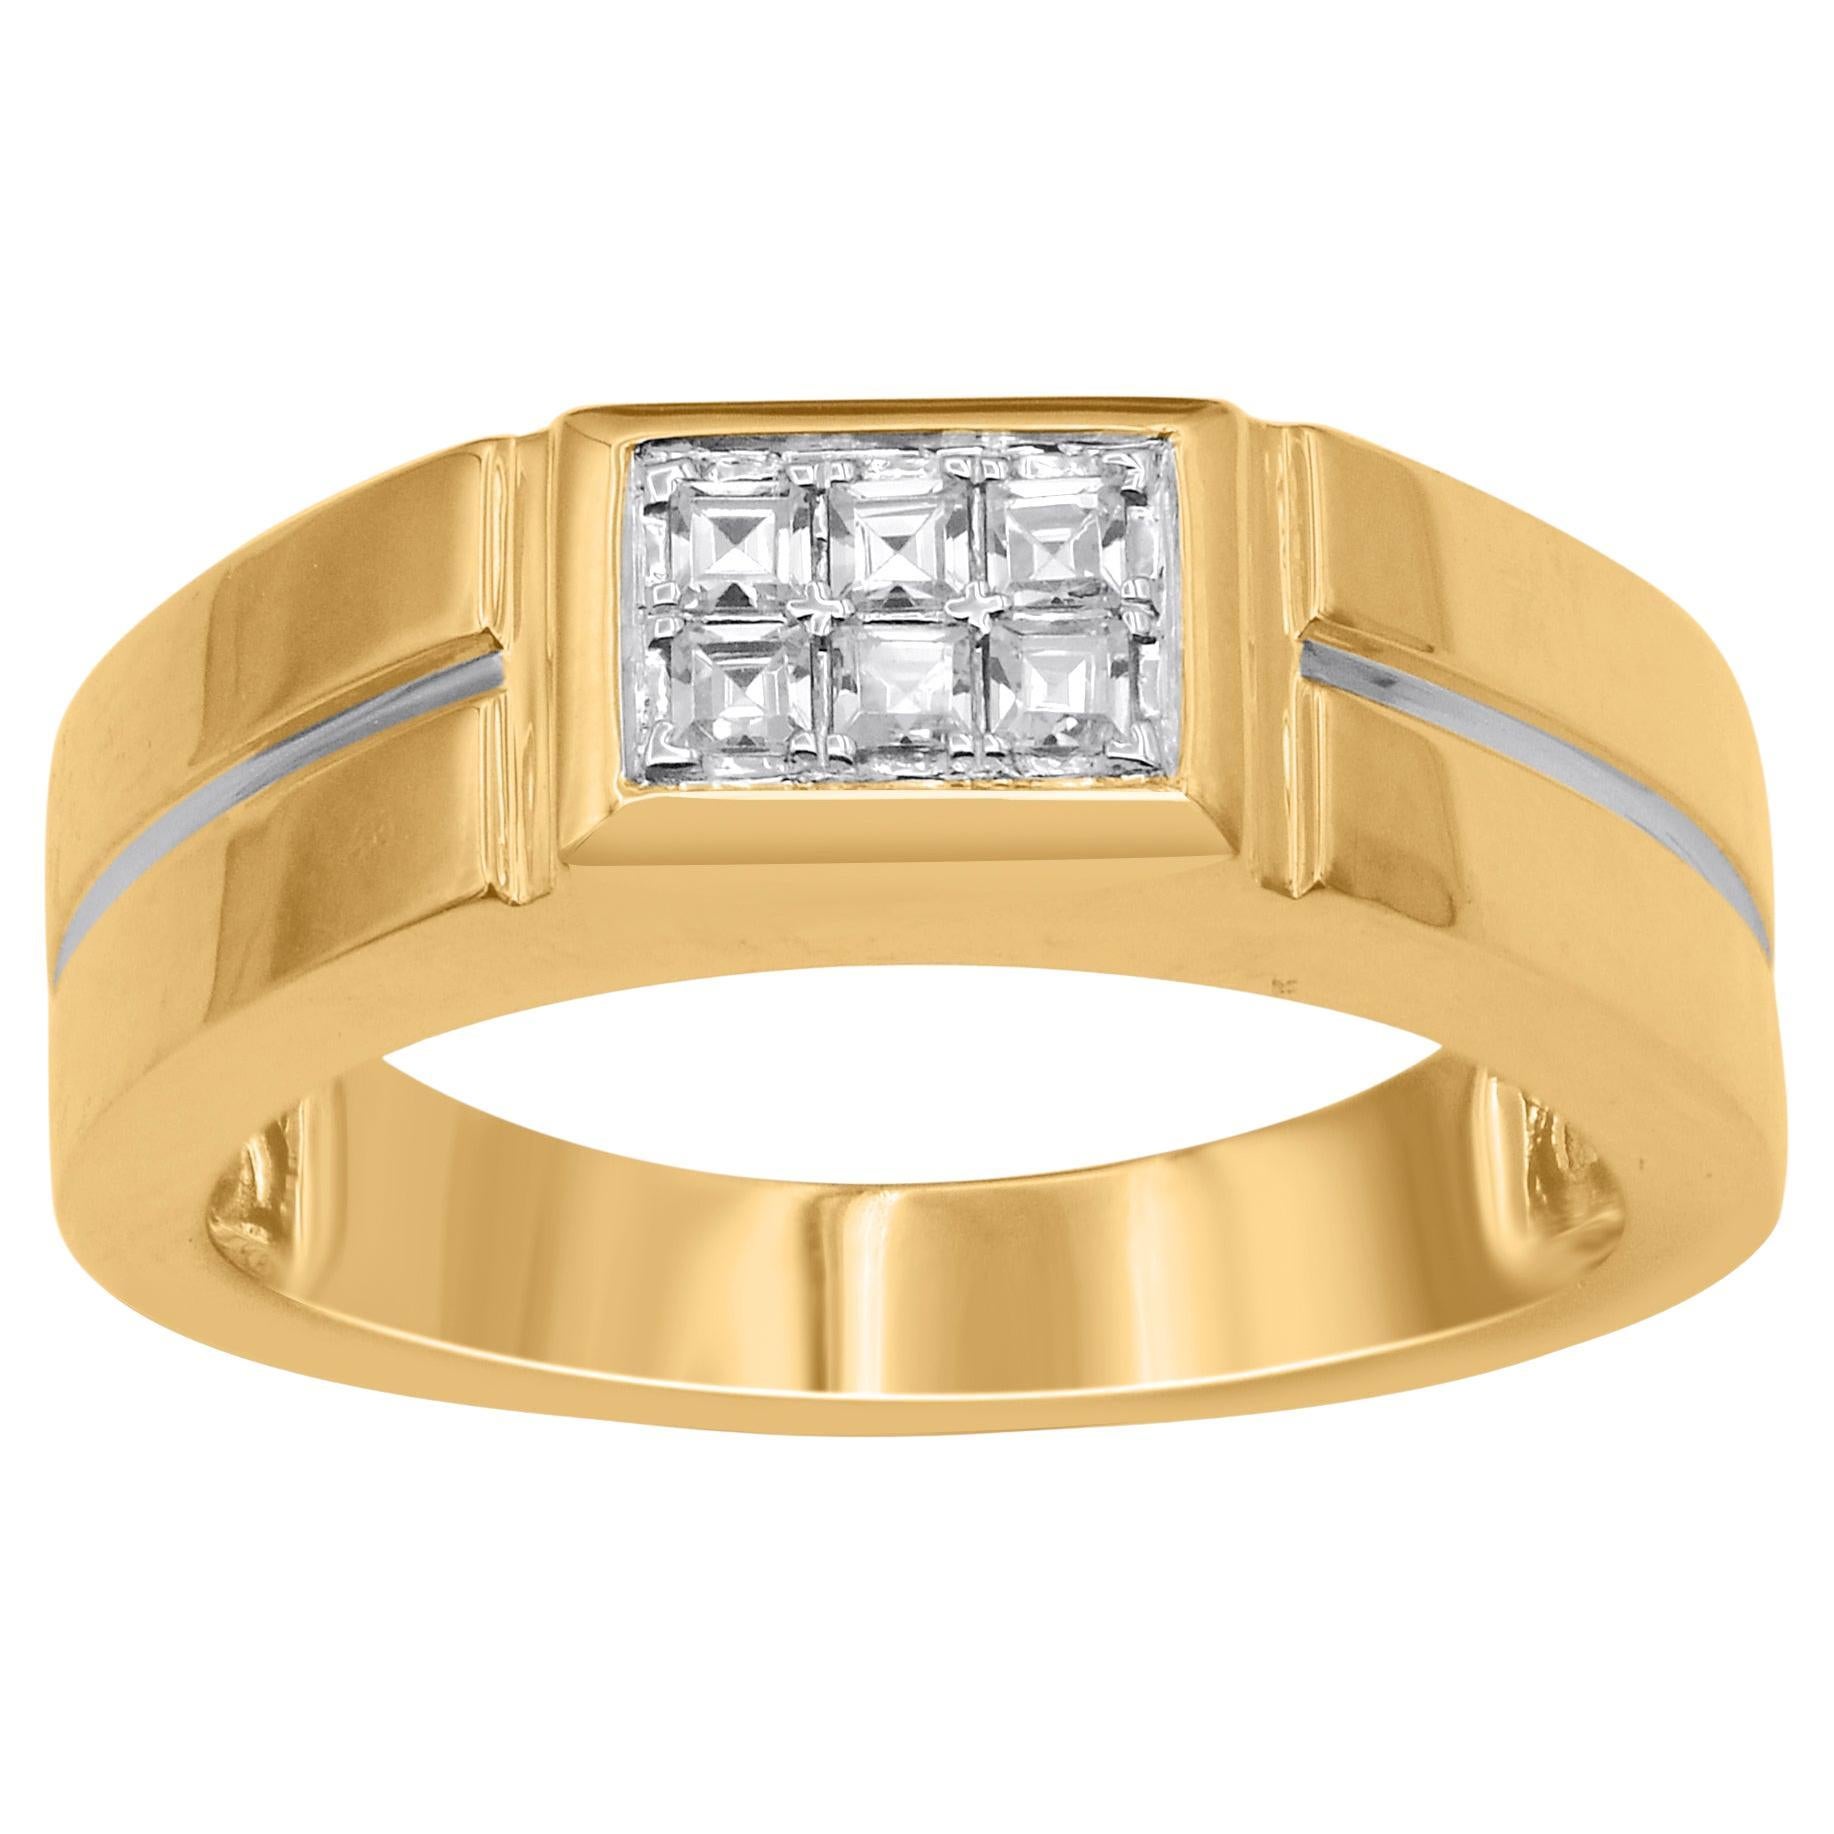 TJD 0.30 Carat Princess Cut Diamond 14KT Yellow Gold Men's Wedding Band Ring For Sale